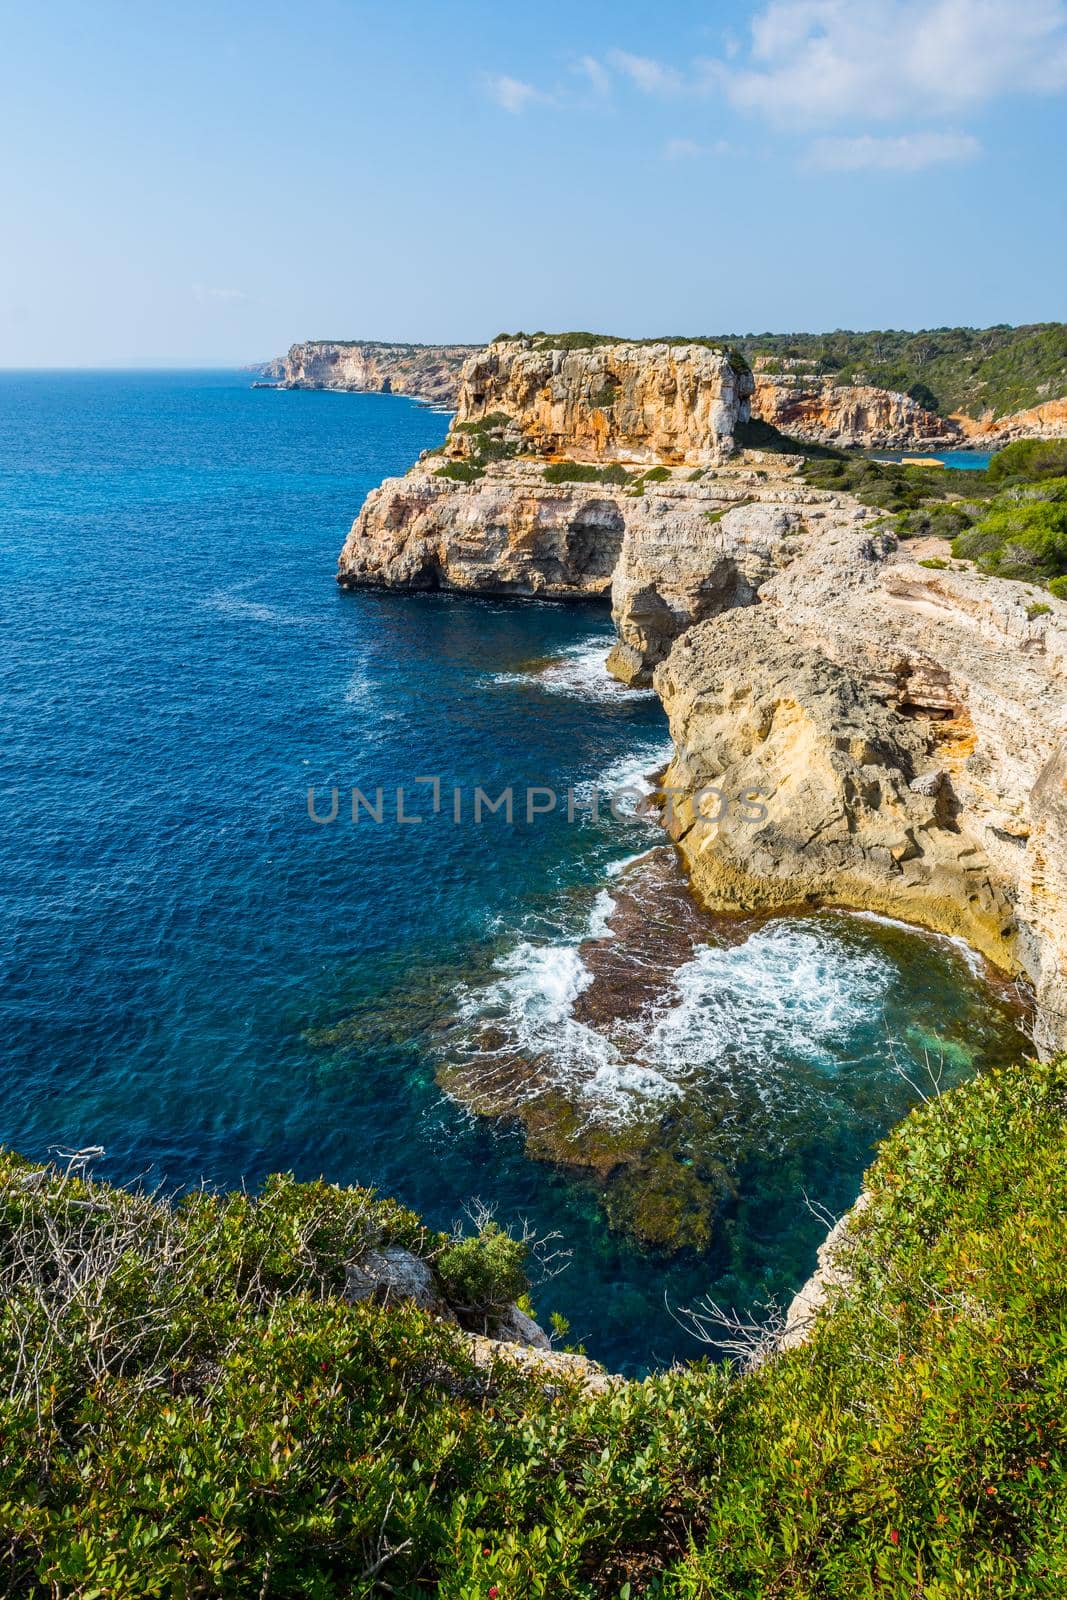 Coast of Majorca (spain) by bildgigant